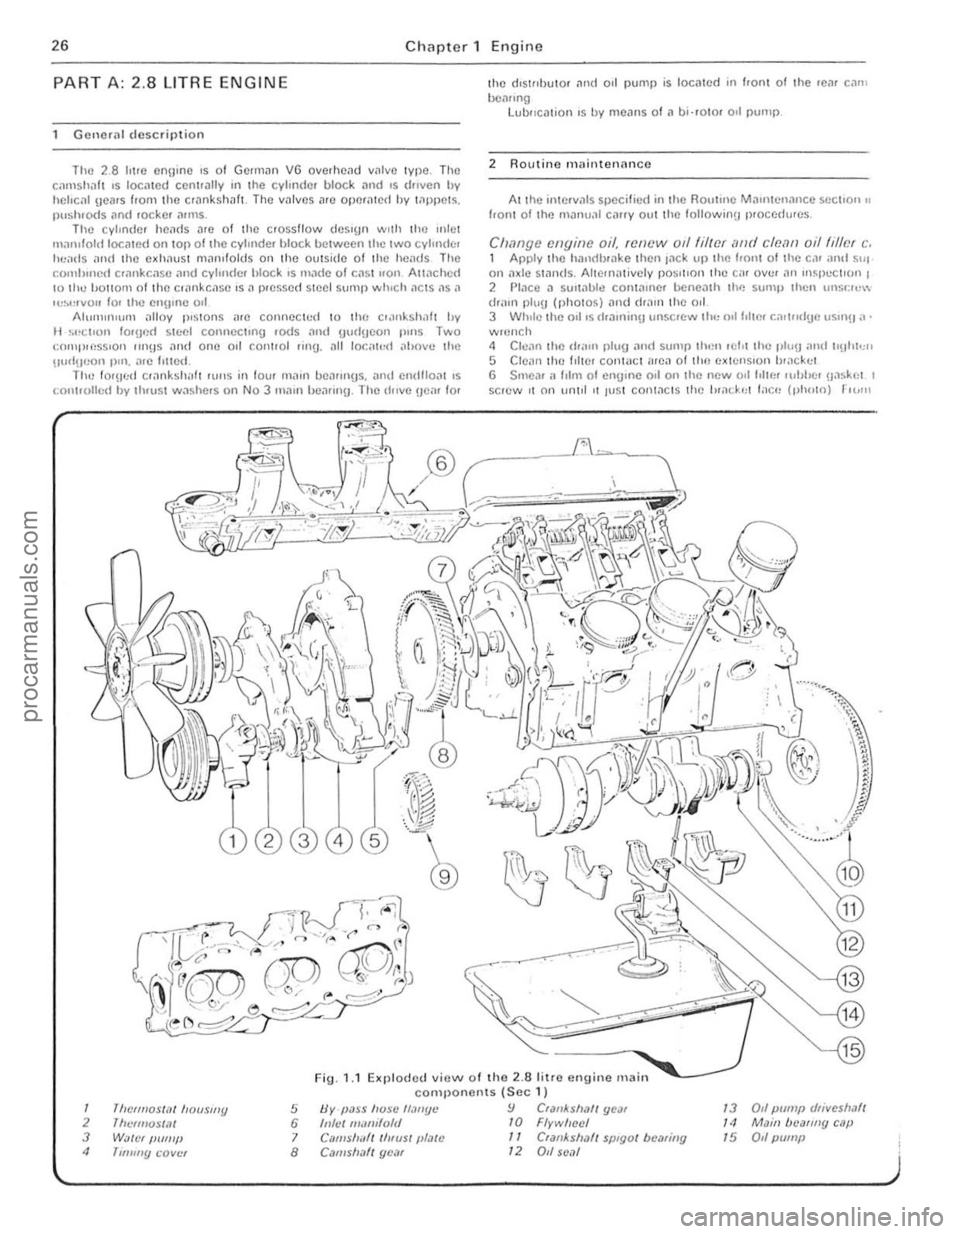 FORD CAPRI 1974  Workshop Manual a 
26 Chapter 1 Engine 
PART A, 2.8  LITRE ENGINE 
General dcscril>liOIl 
The 2.8  !lIte cnnlne IS of GC,Il1;l1l  V(l Qve.hctld v<llvc type. The (OI,llsh;,l l .s loe;lIed centrally In the tylimler blo